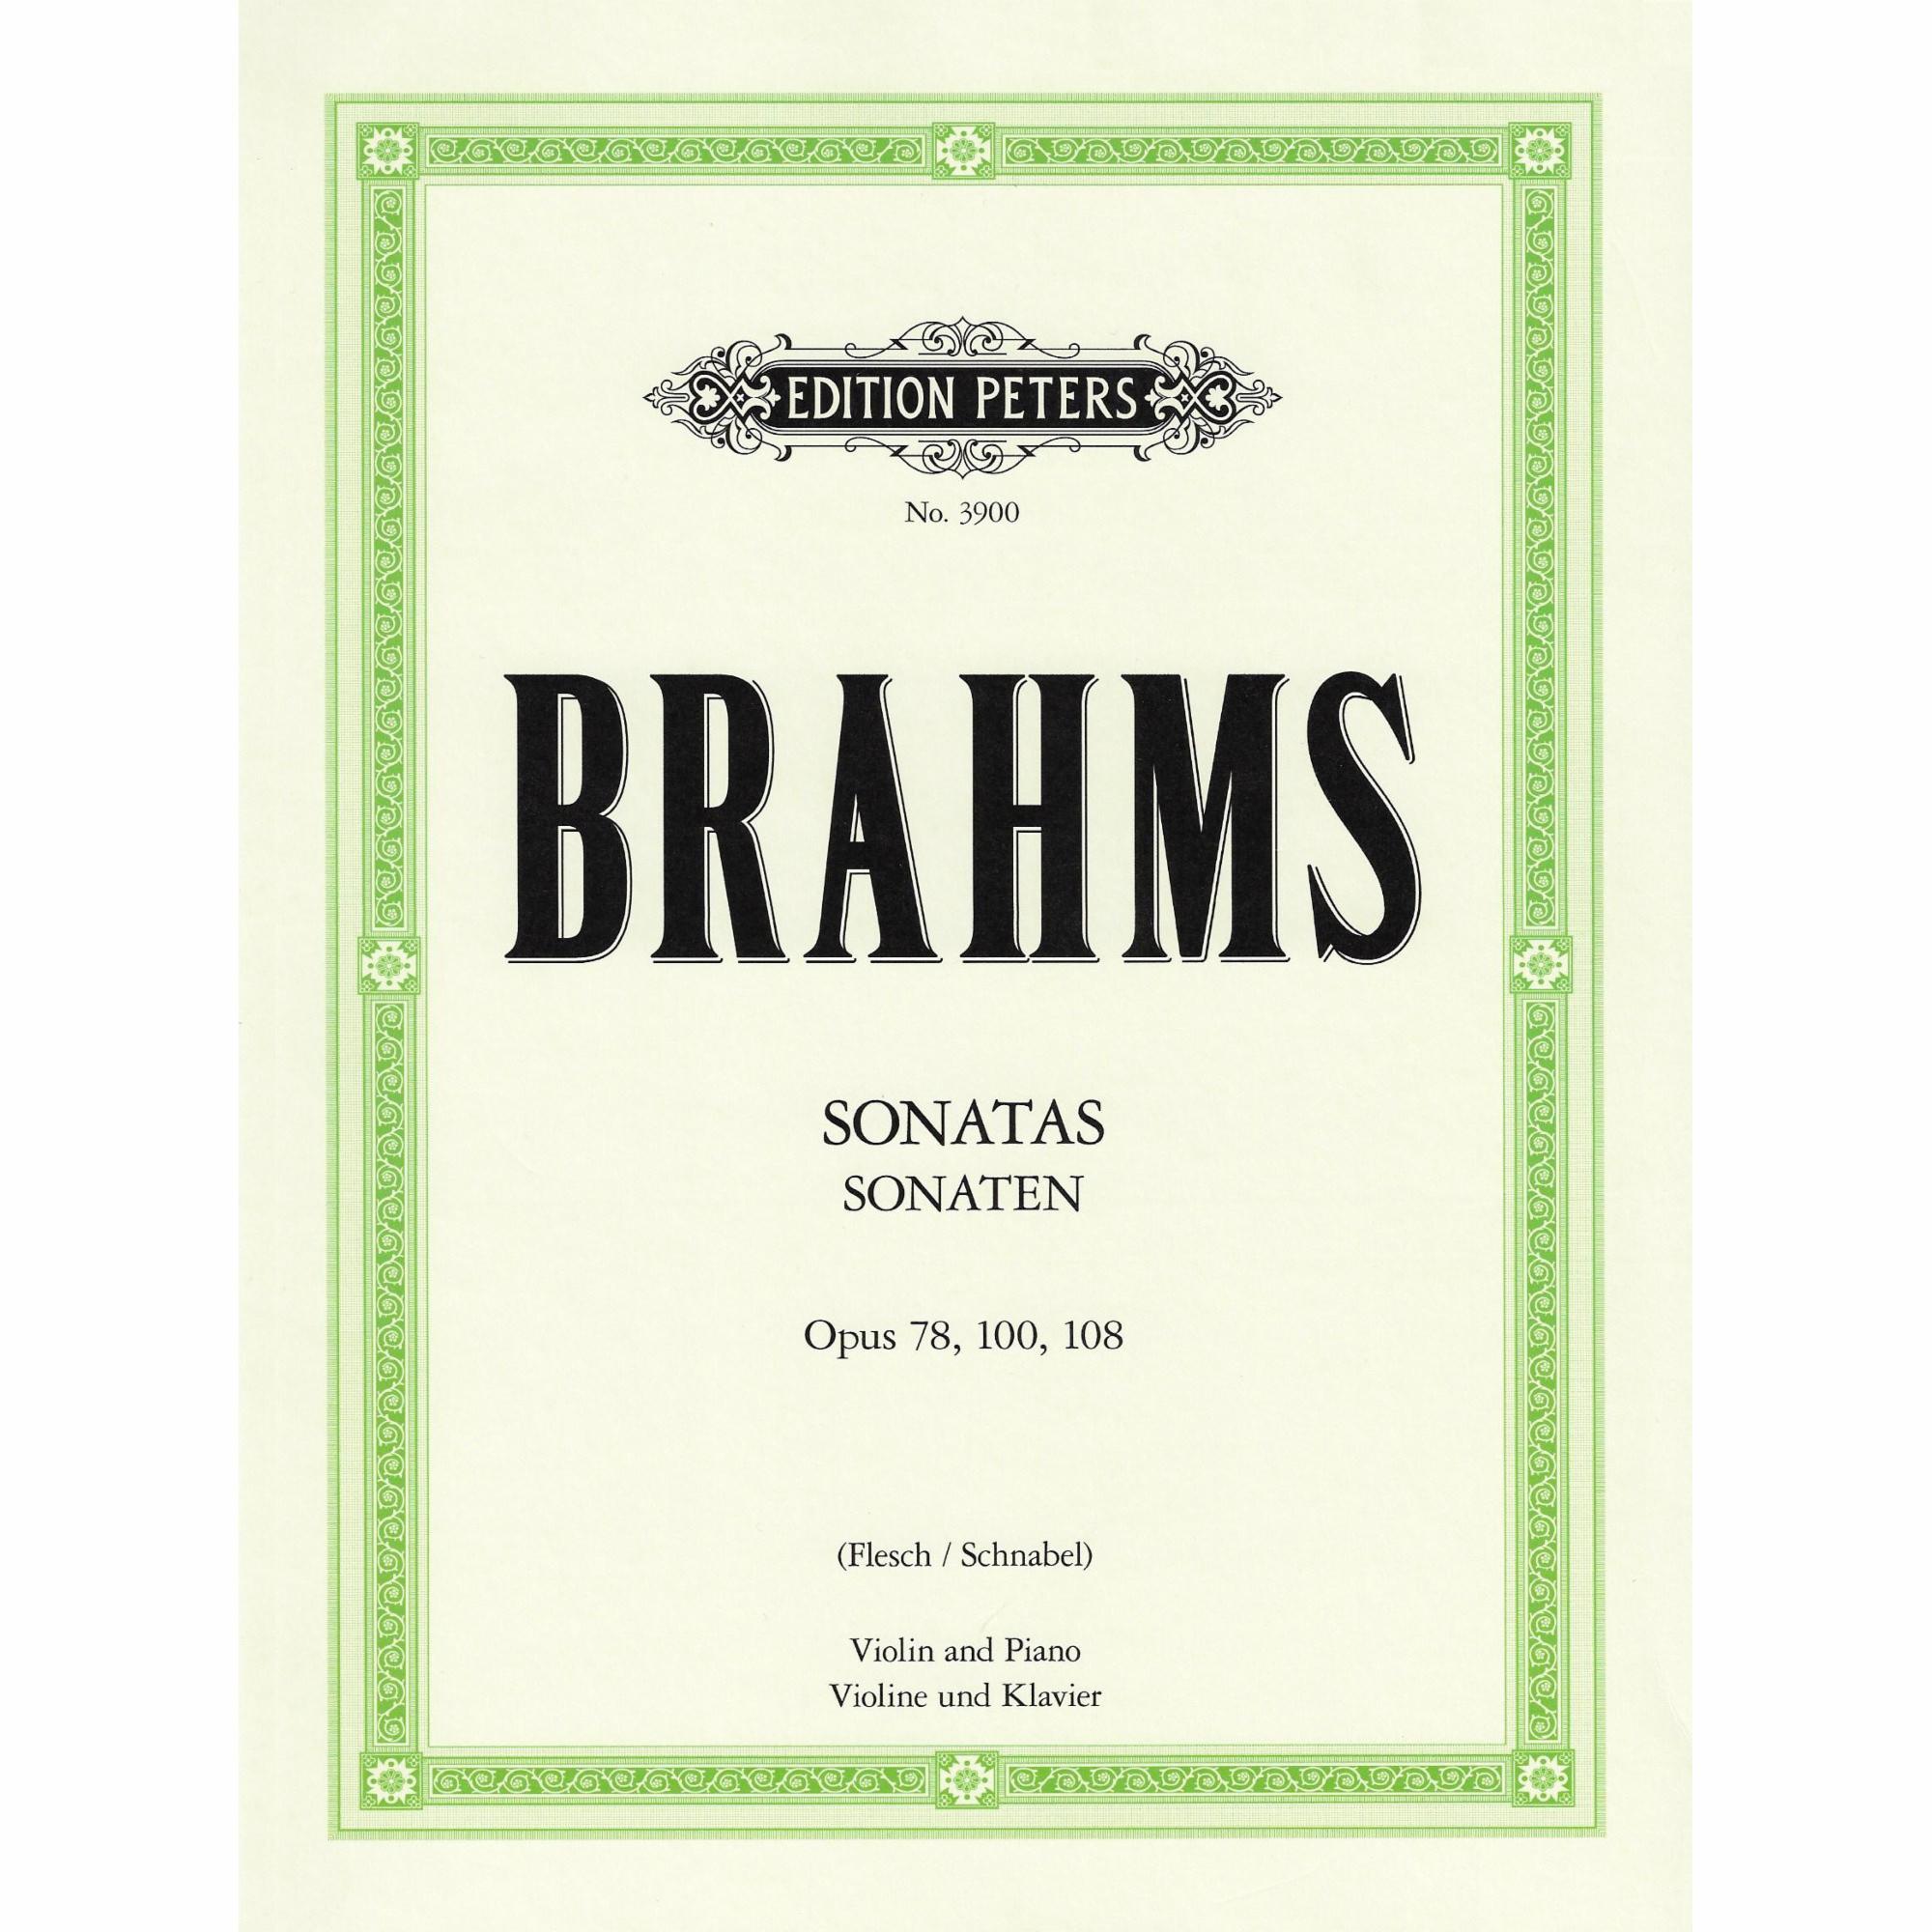 Brahms -- Sonatas, Op. 78, 100 & 108 for Violin and Piano